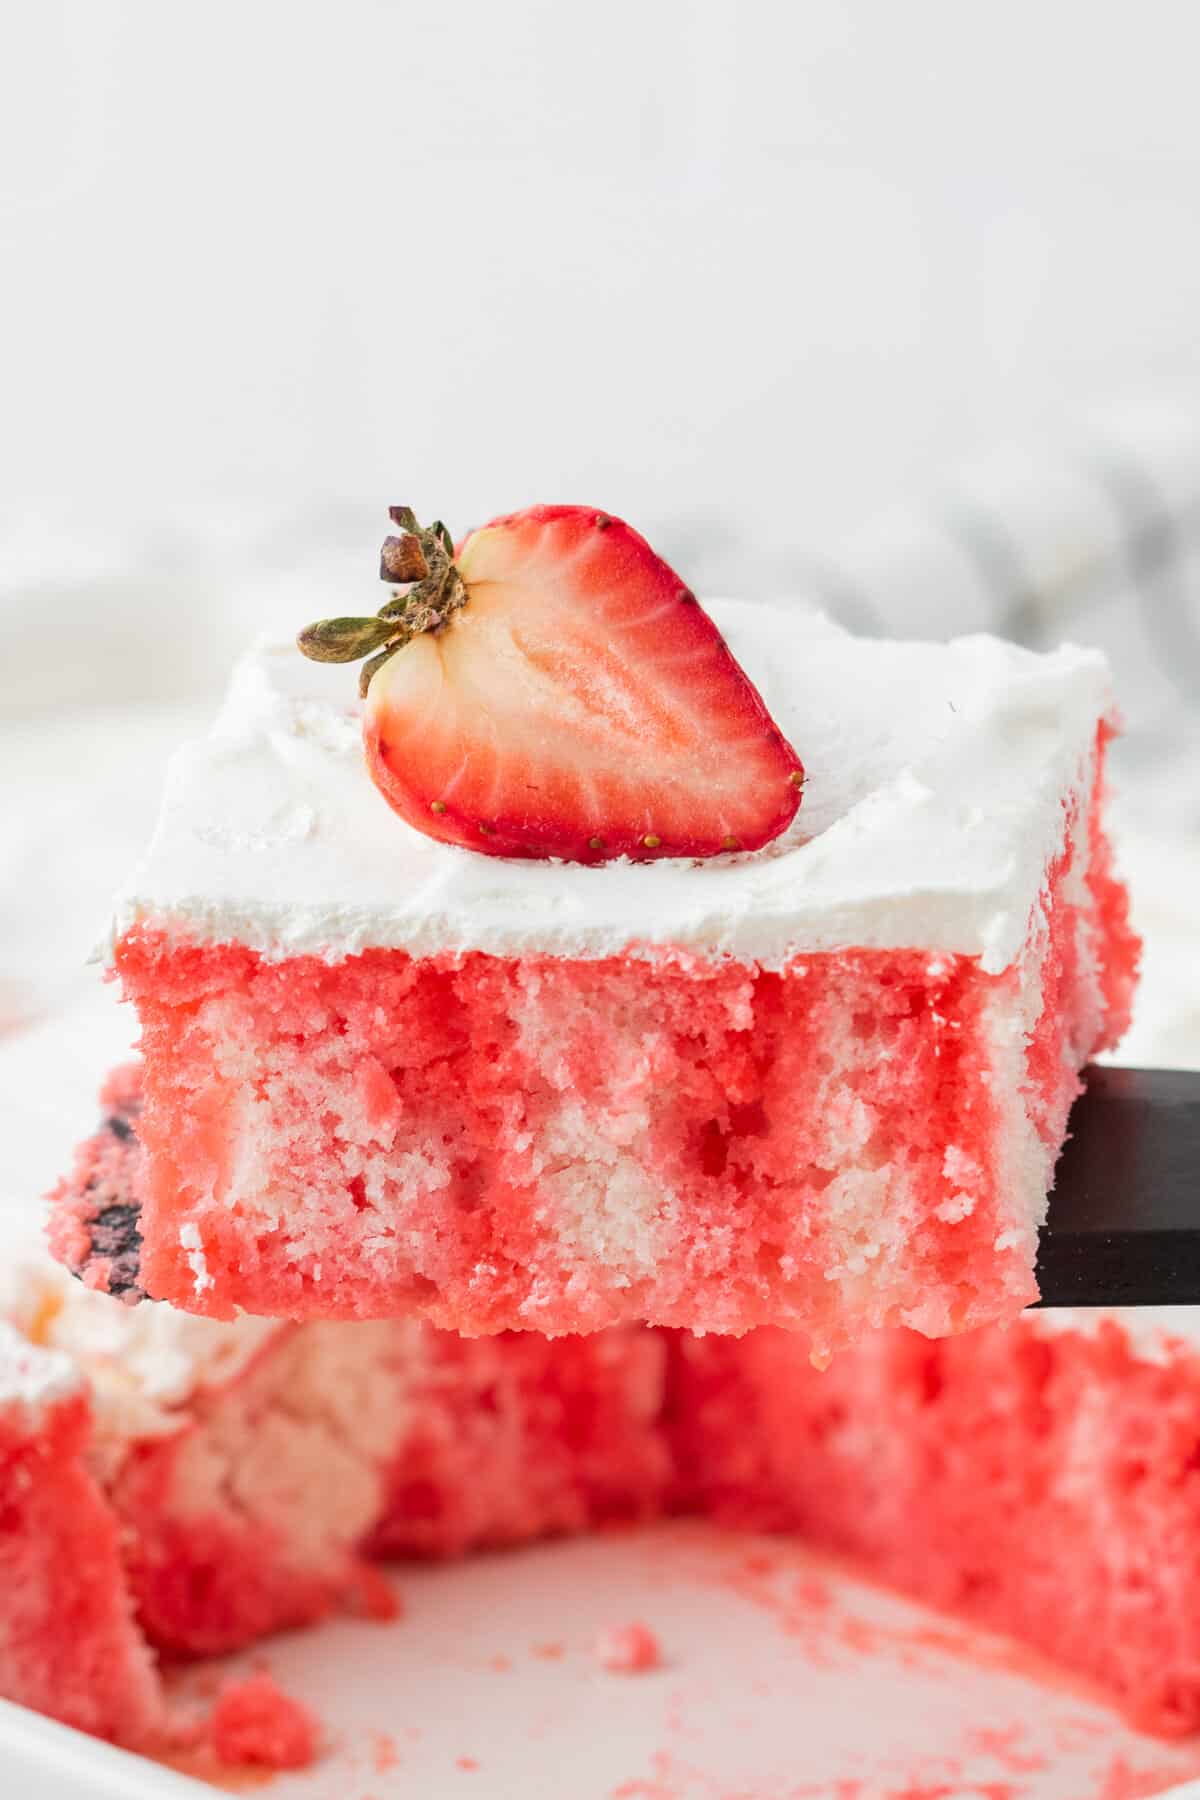 Spatula lifting slice of strawberry jello poke cake from cake dish.